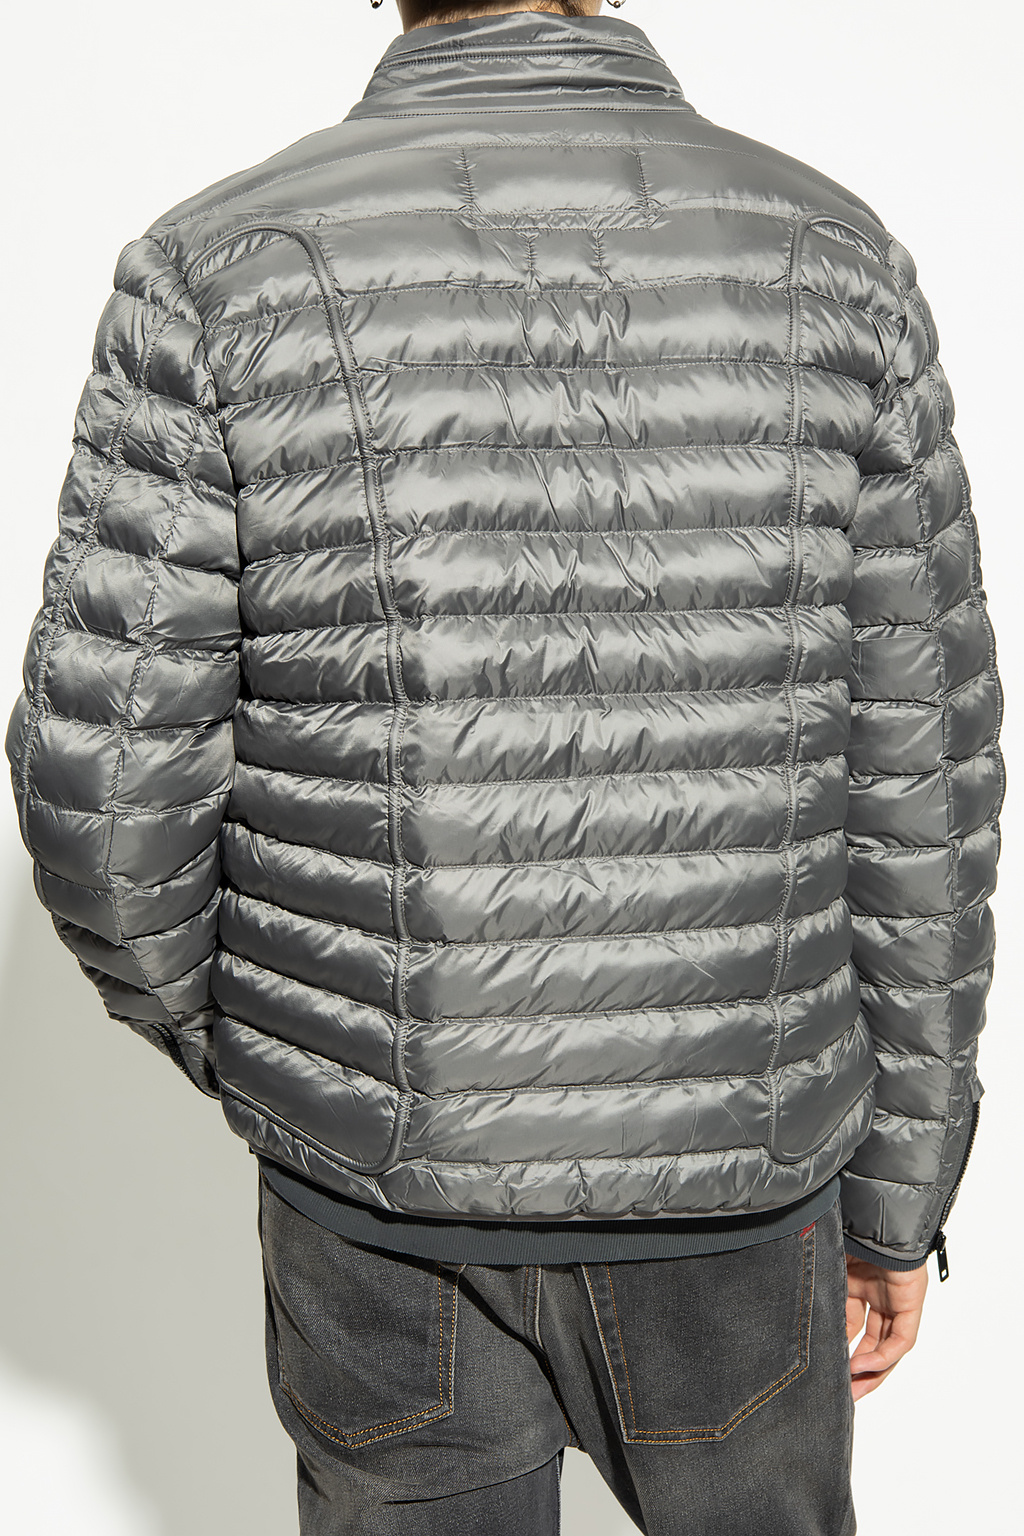 Diesel 'W-HAWK-NW' insulated jacket | Men's Clothing | Vitkac